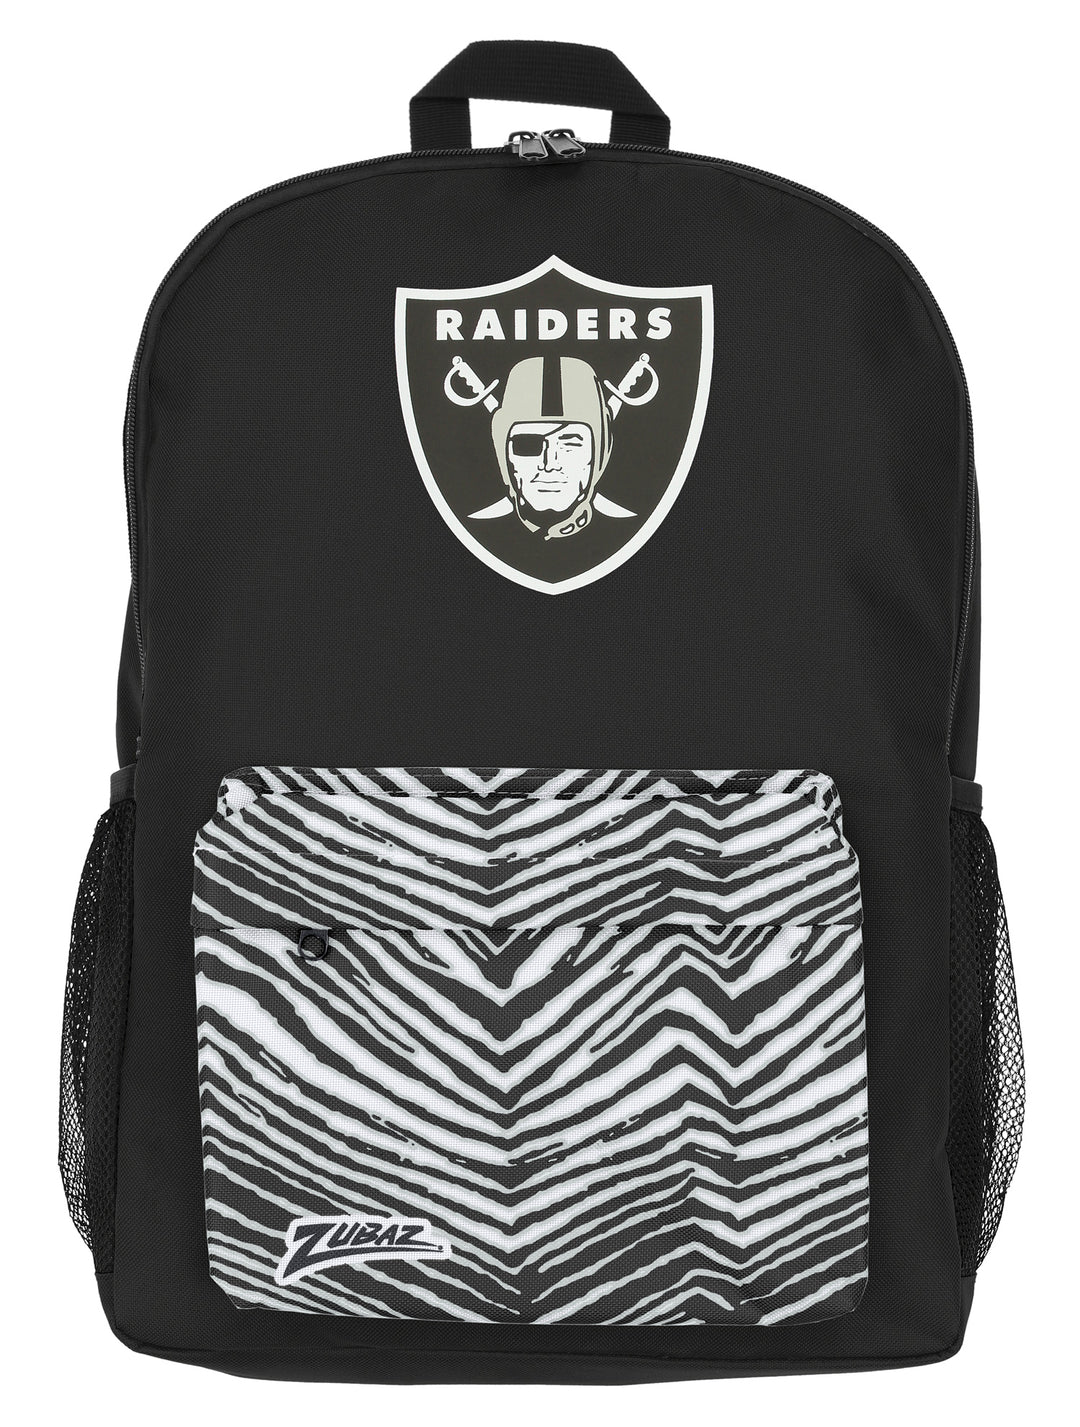 FOCO X ZUBAZ NFL Las Vegas Raiders Zebra 2 Collab Printed Backpack